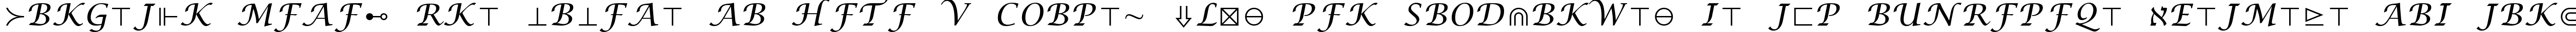 Пример написания шрифтом Lucida Bright Math Symbol текста на испанском